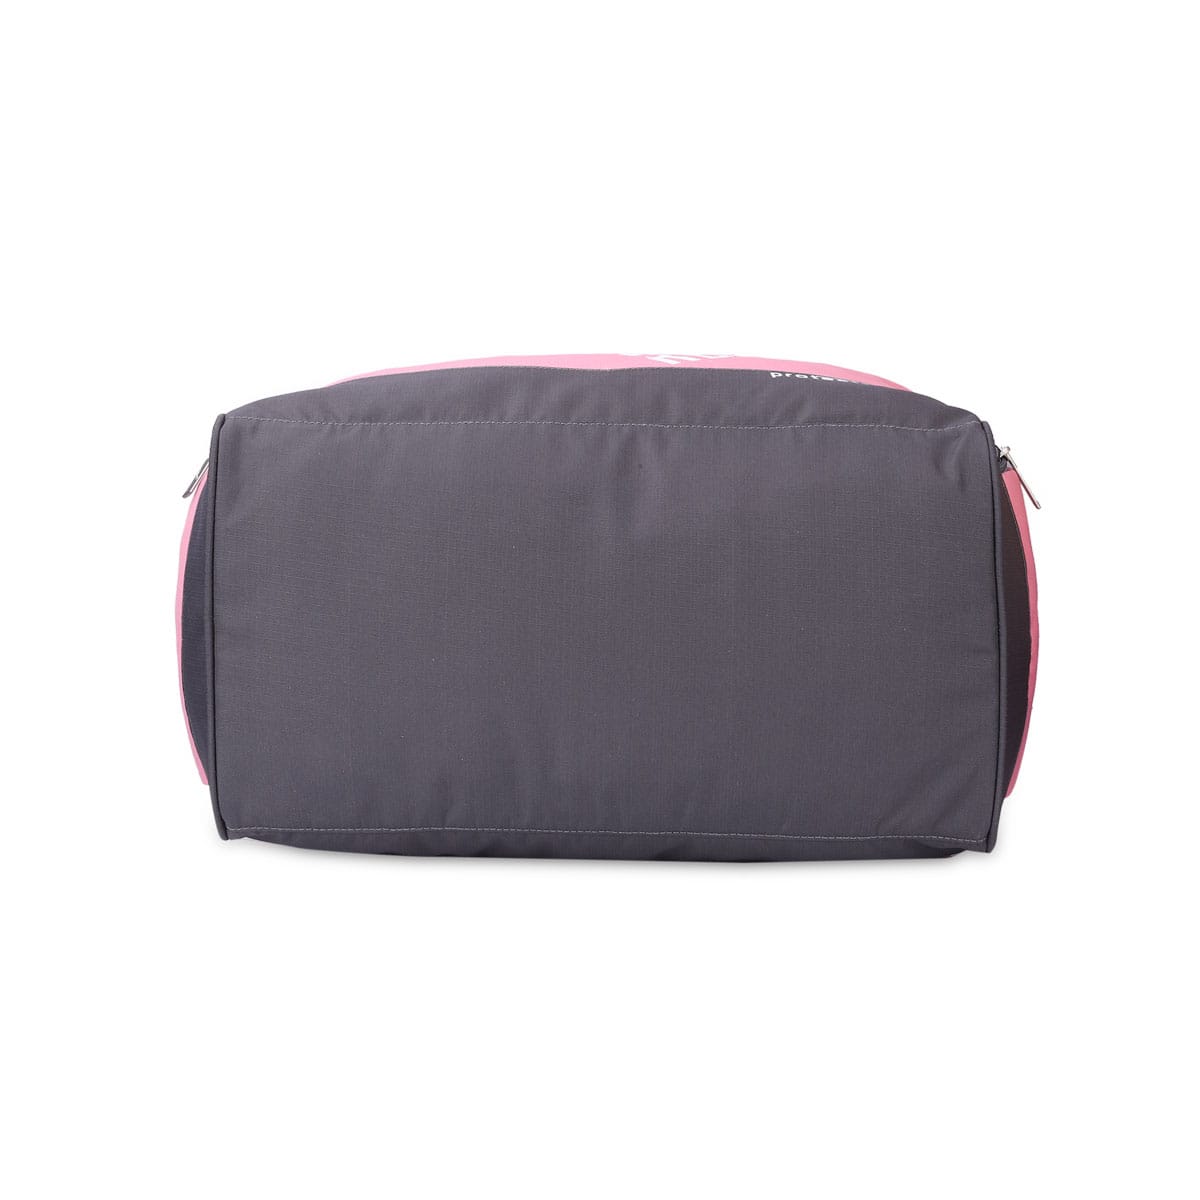 Grey-Pink | Protecta Rep Gym Bag-3